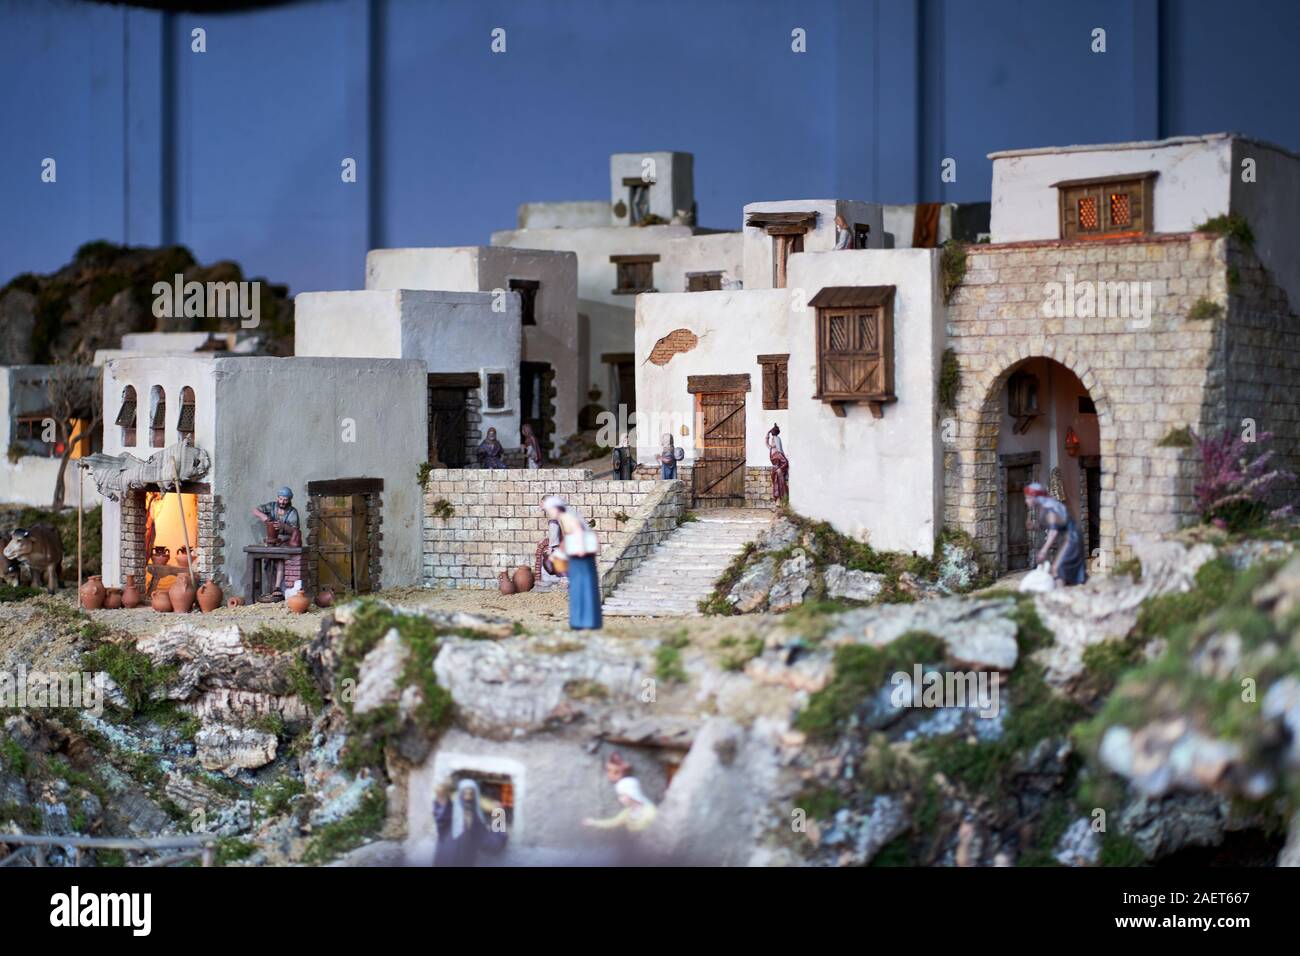 Part of a large scale nativity scene in the Plaza mayor of Torrejon de Ardoz Stock Photo